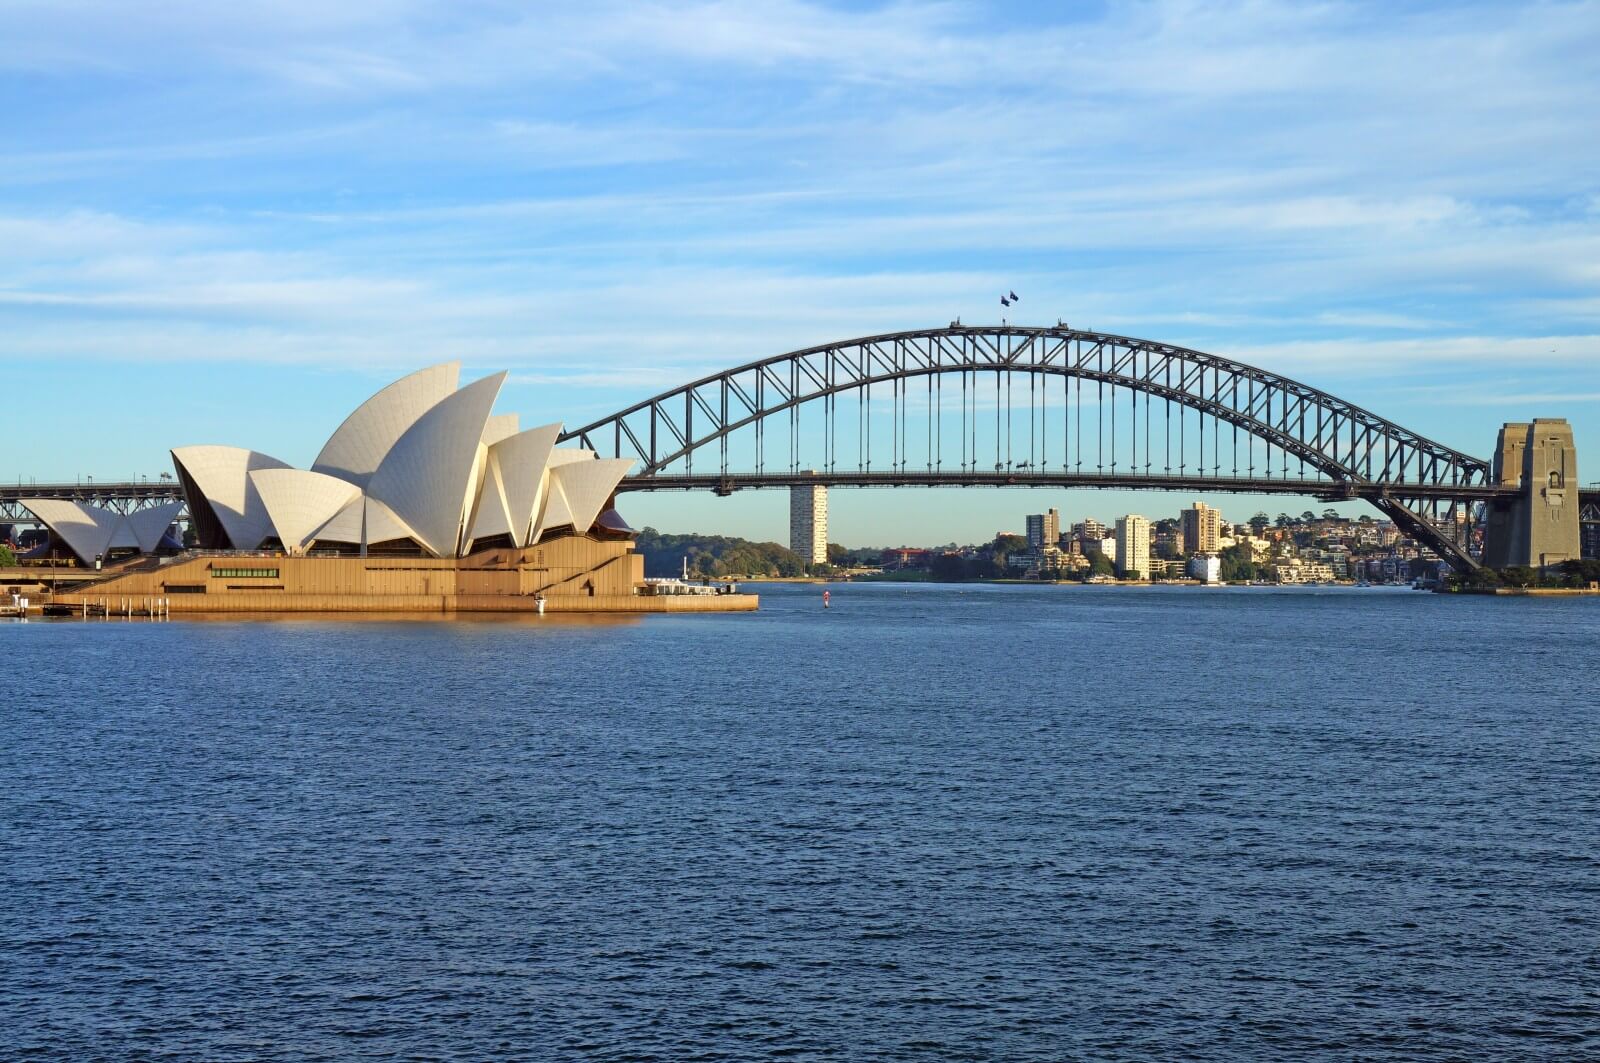 The Sydney Harbour Bridge and Opera House